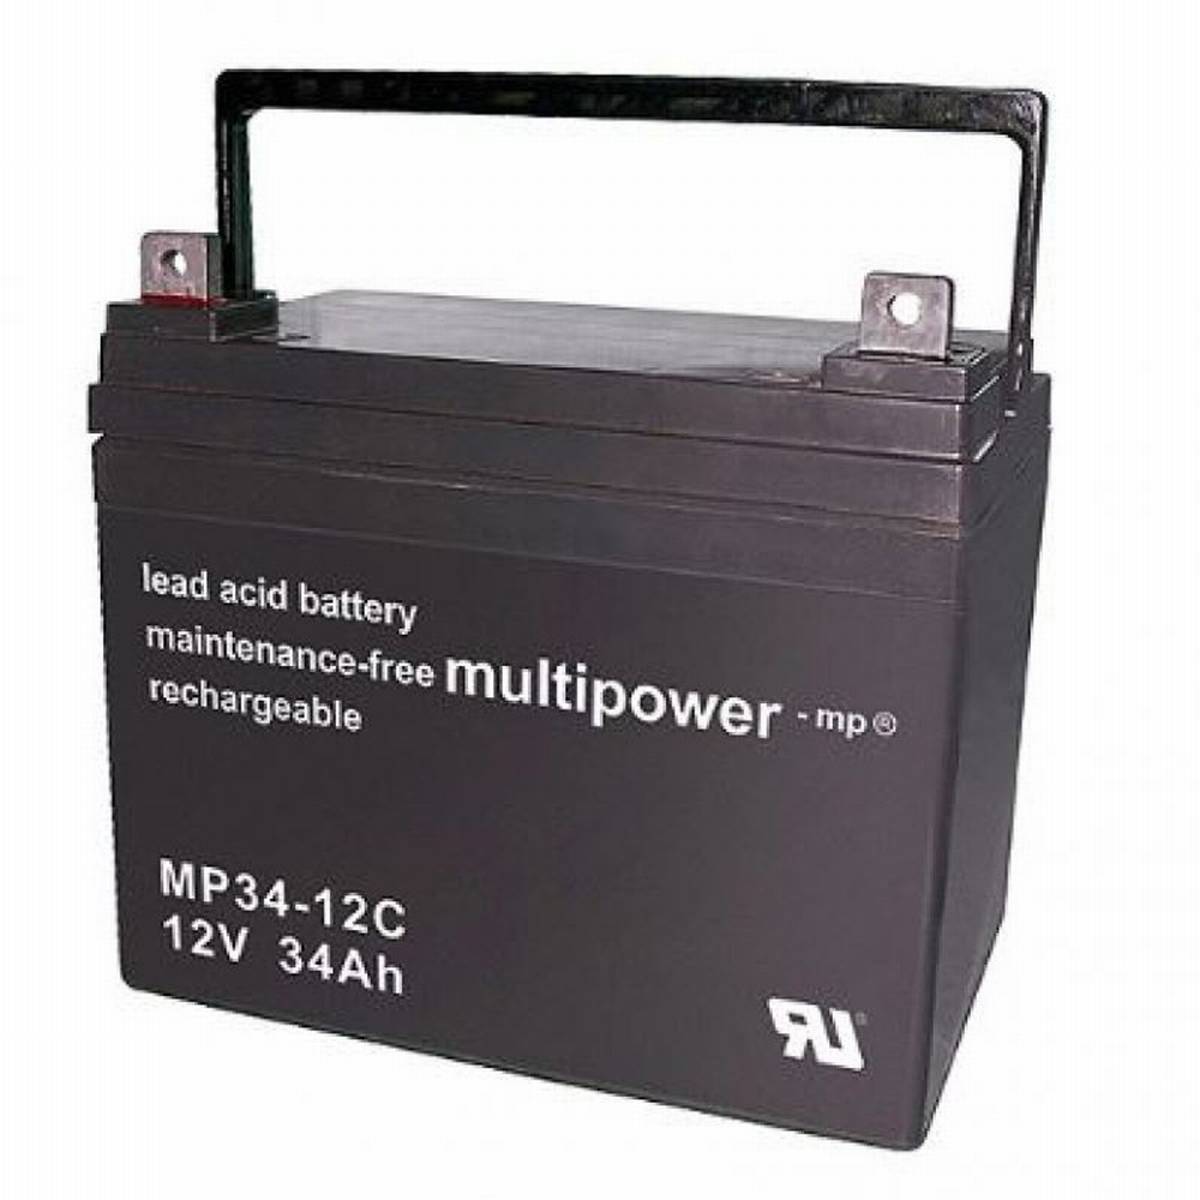 Multipower MP34-12C 12V 34Ah di batteria al piombo tipo ciclo